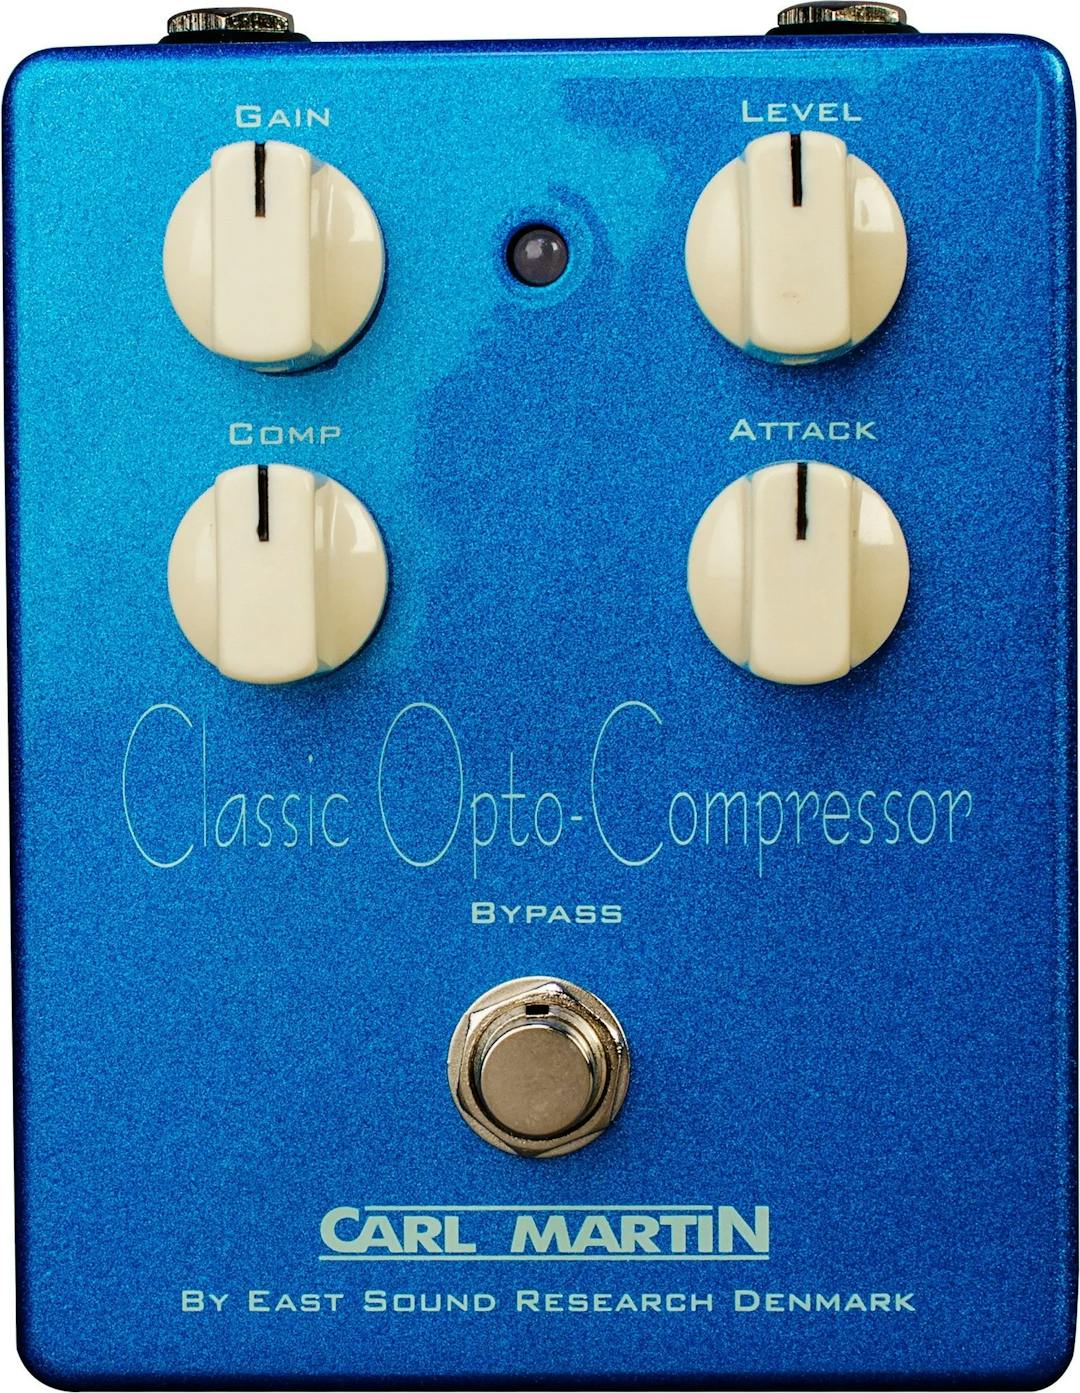 Opto-Compressor Guitar Pedal By Carl Martin